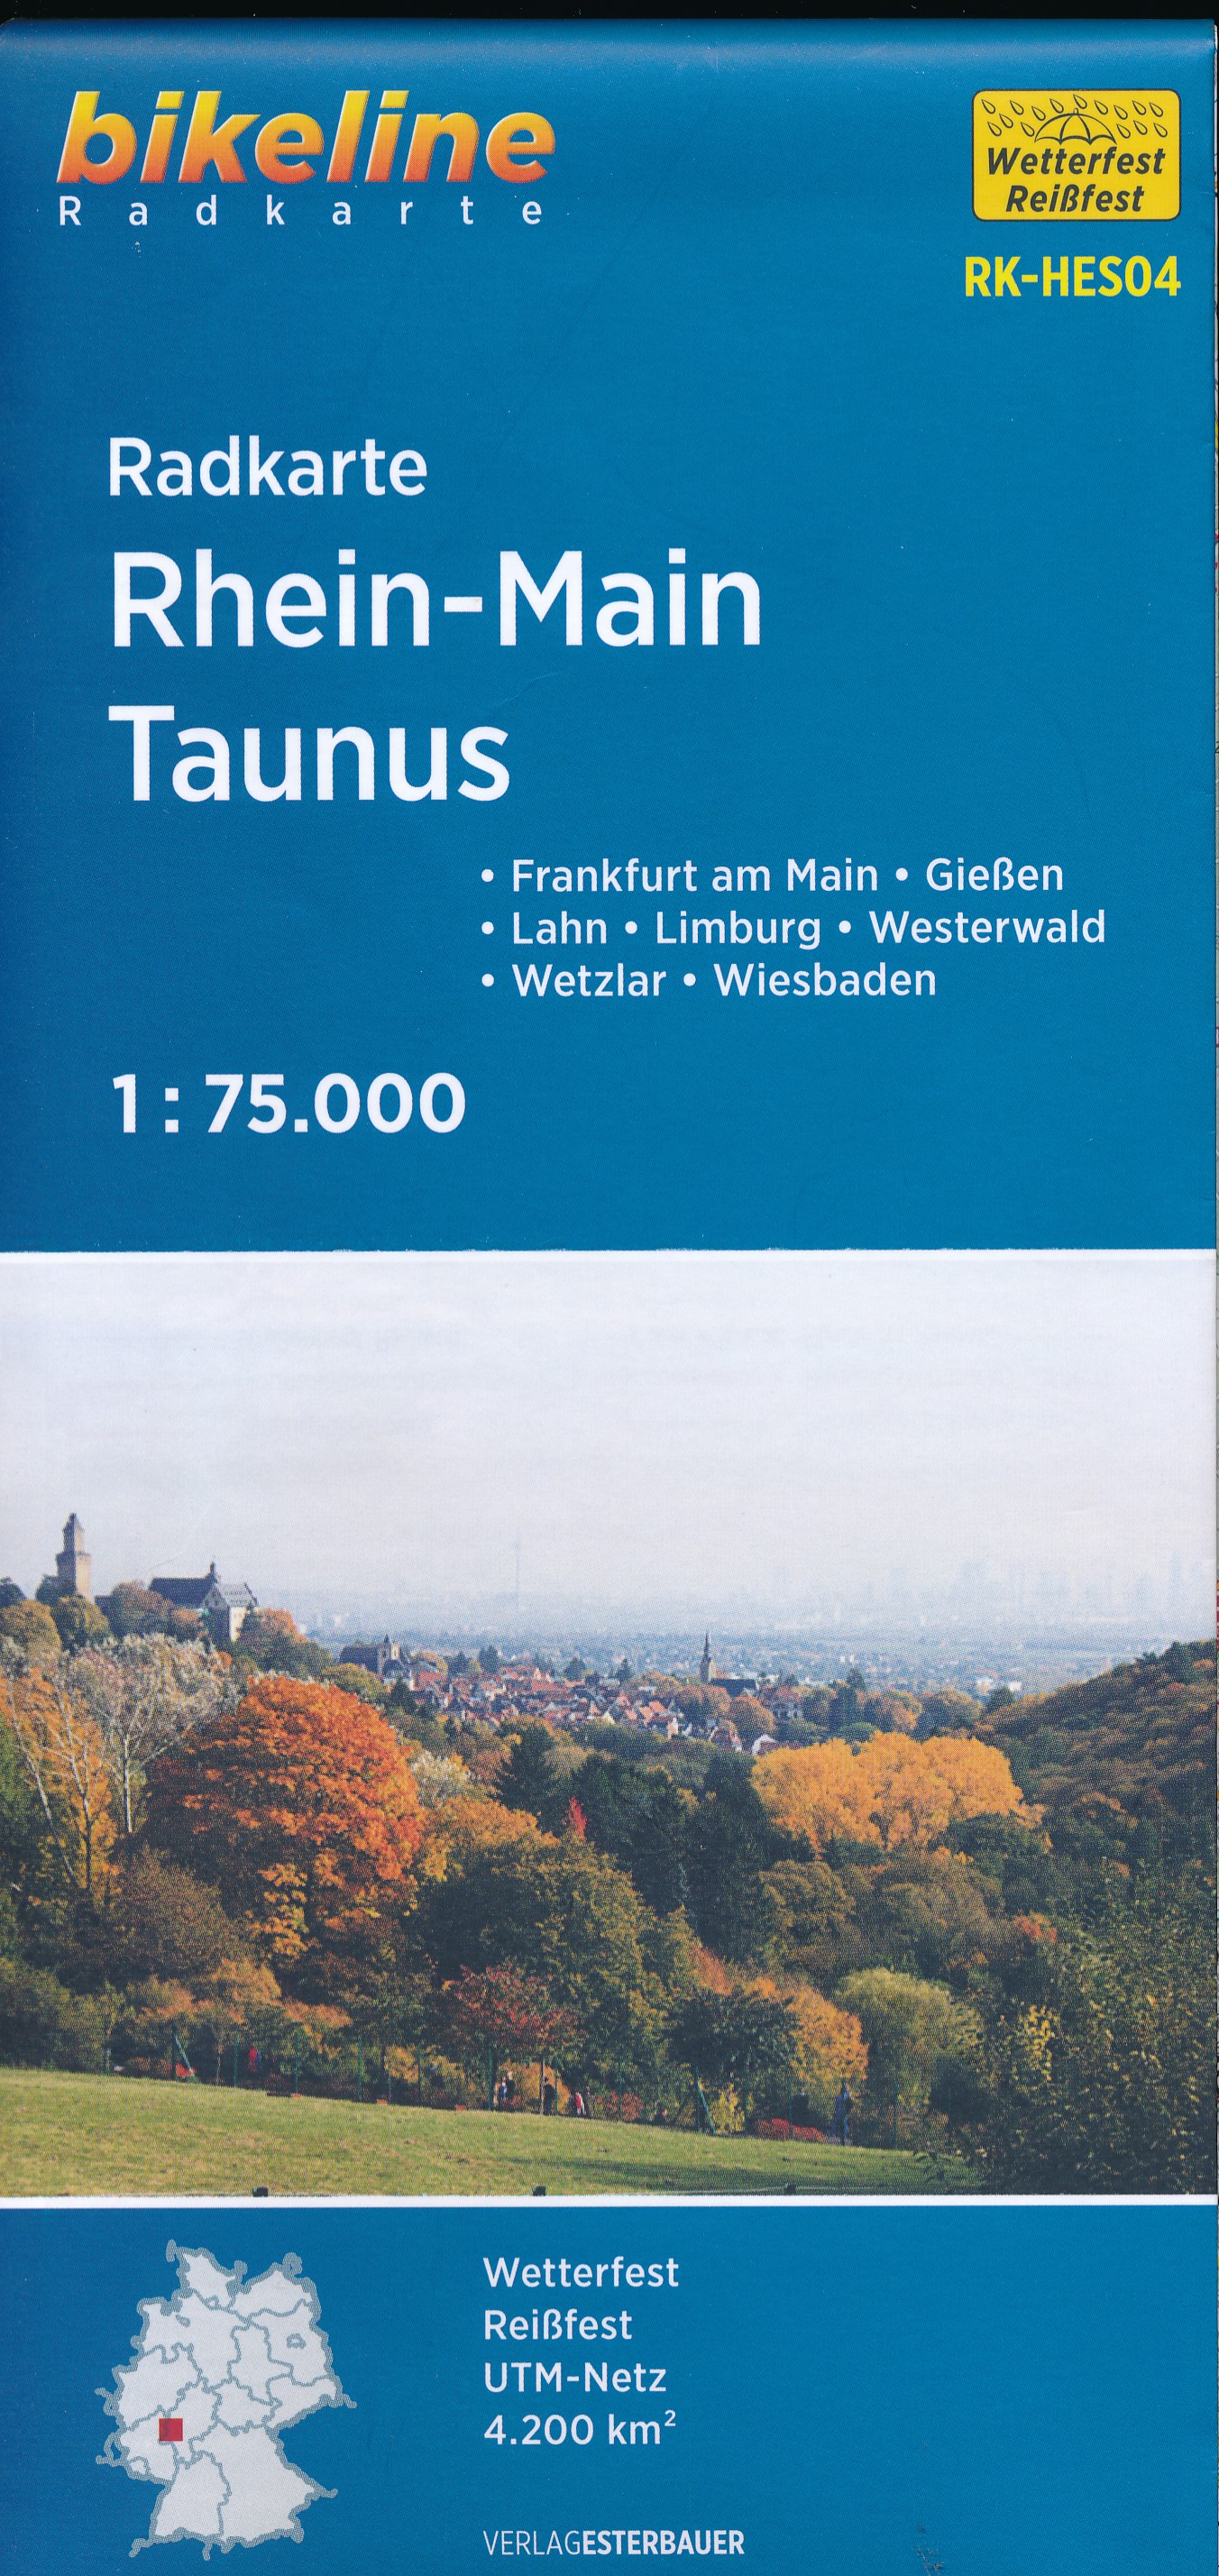 Online bestellen: Fietskaart HES04 Bikeline Radkarte Rhein - Main Taunus | Esterbauer